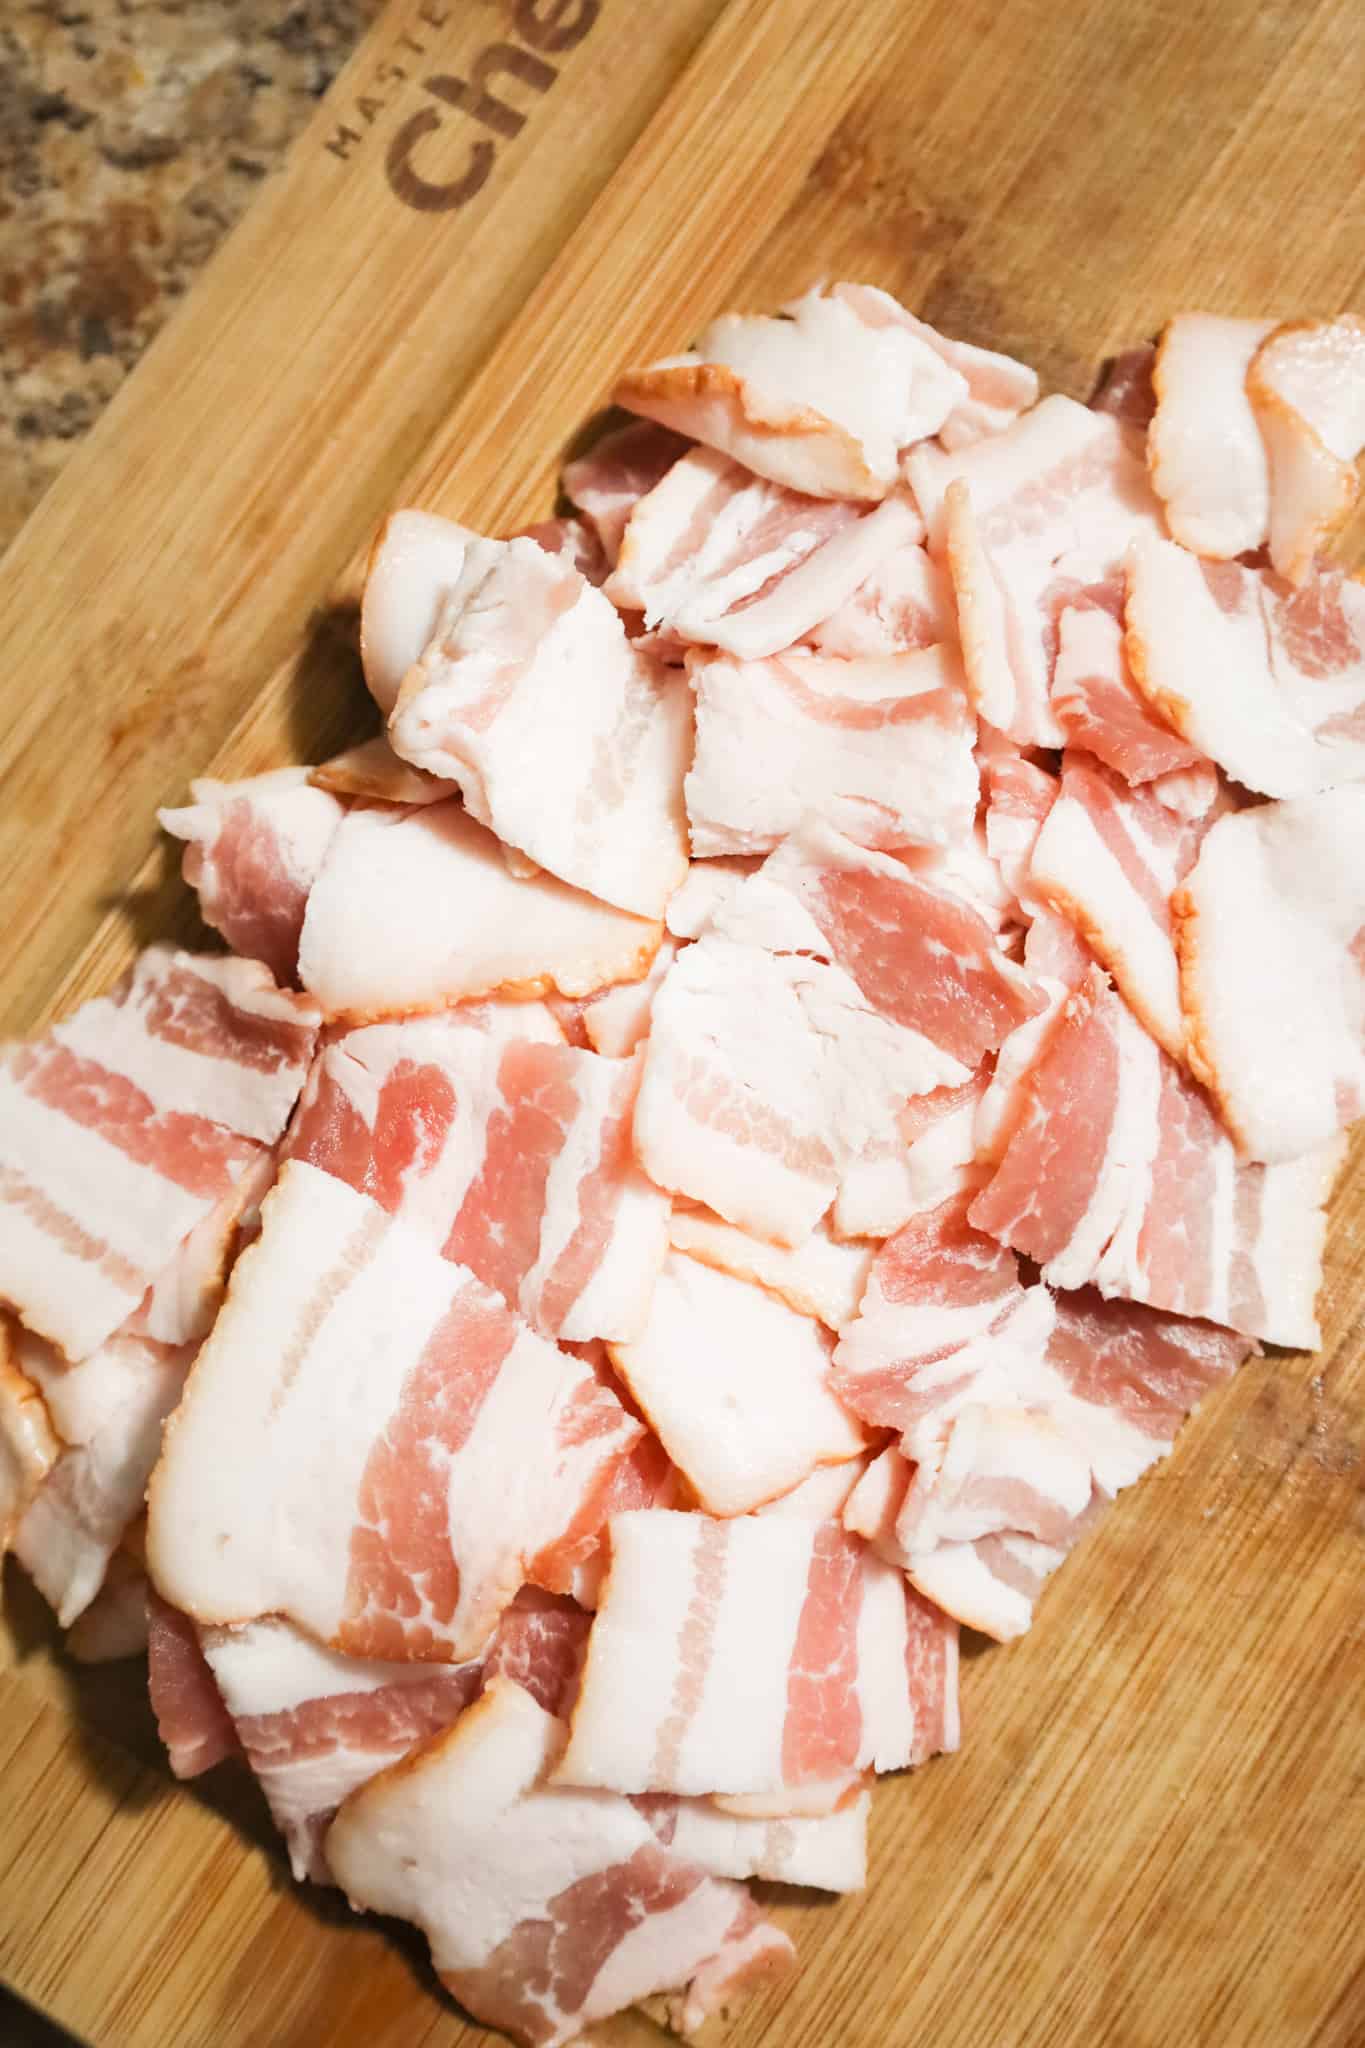 raw bacon pieces on a cutting board